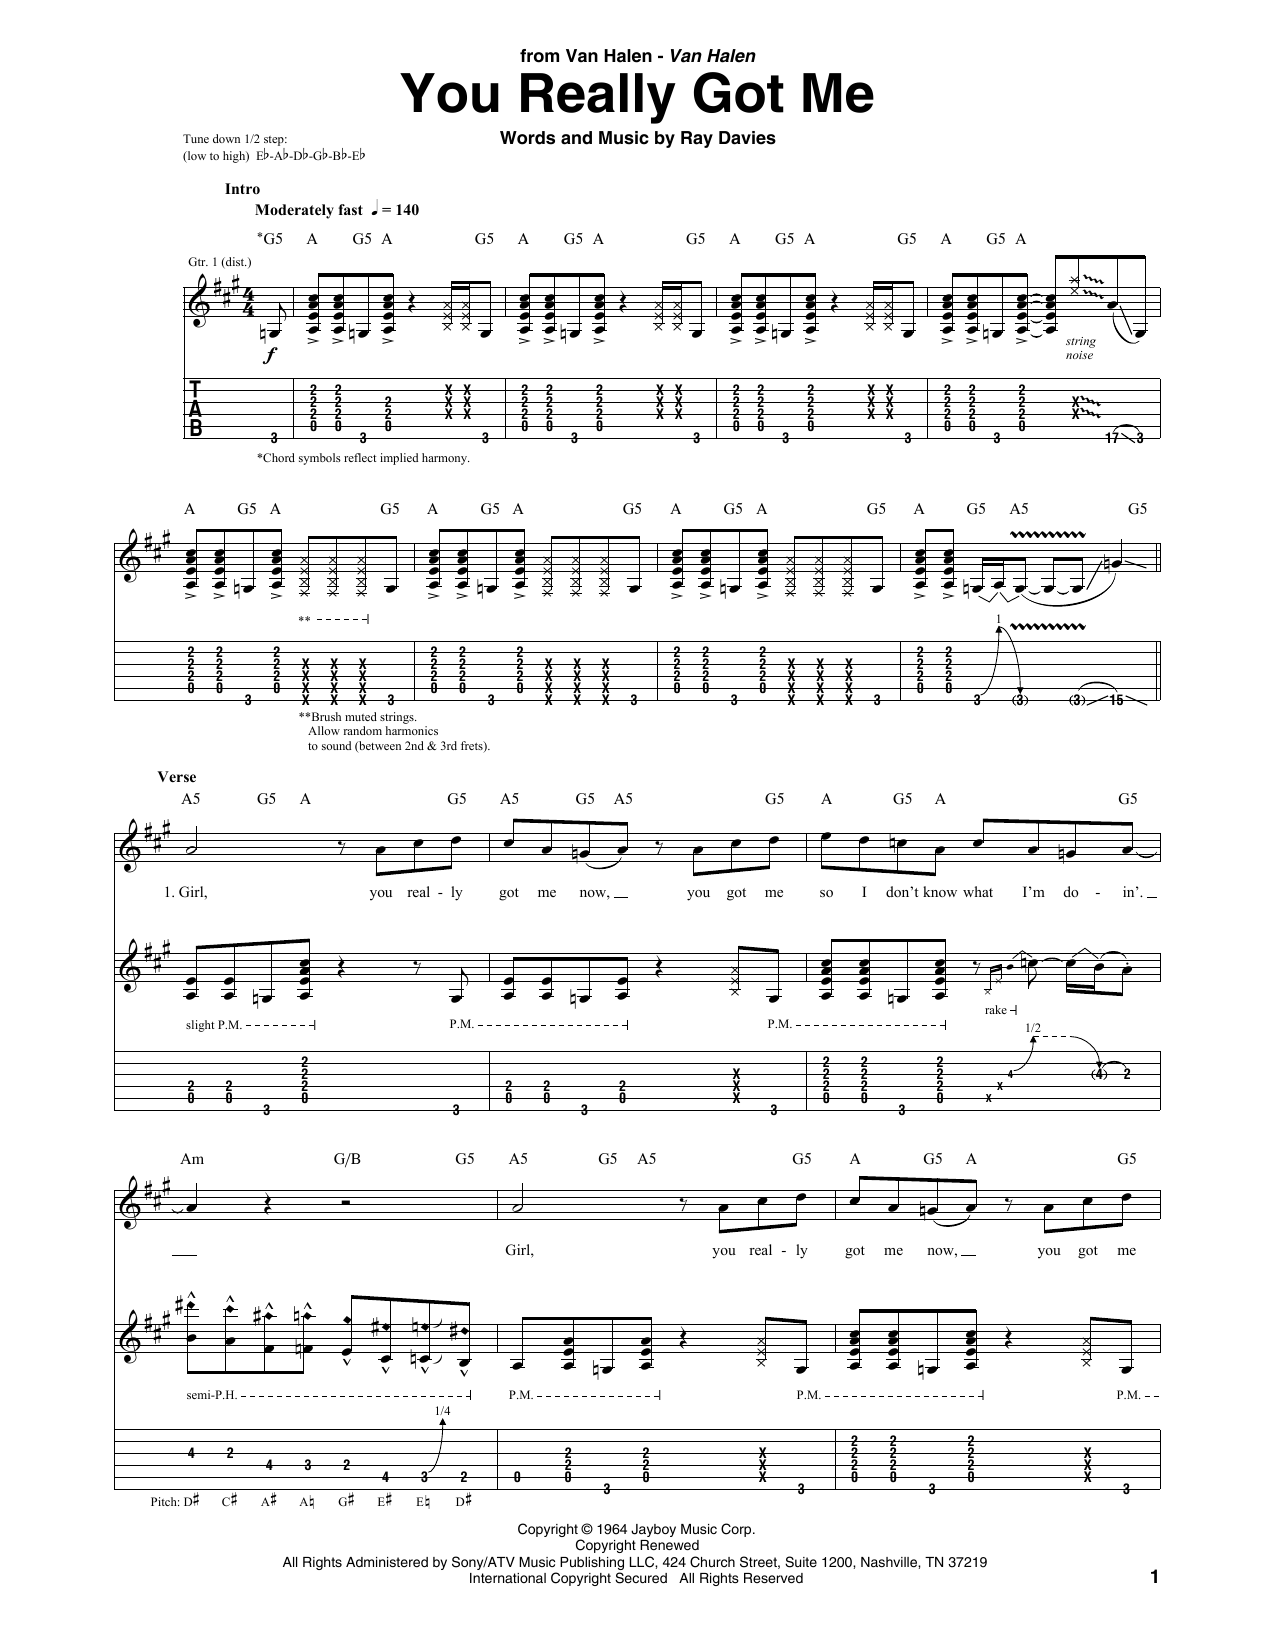 Van Halen You Really Got Me Sheet Music Notes & Chords for Guitar Tab - Download or Print PDF